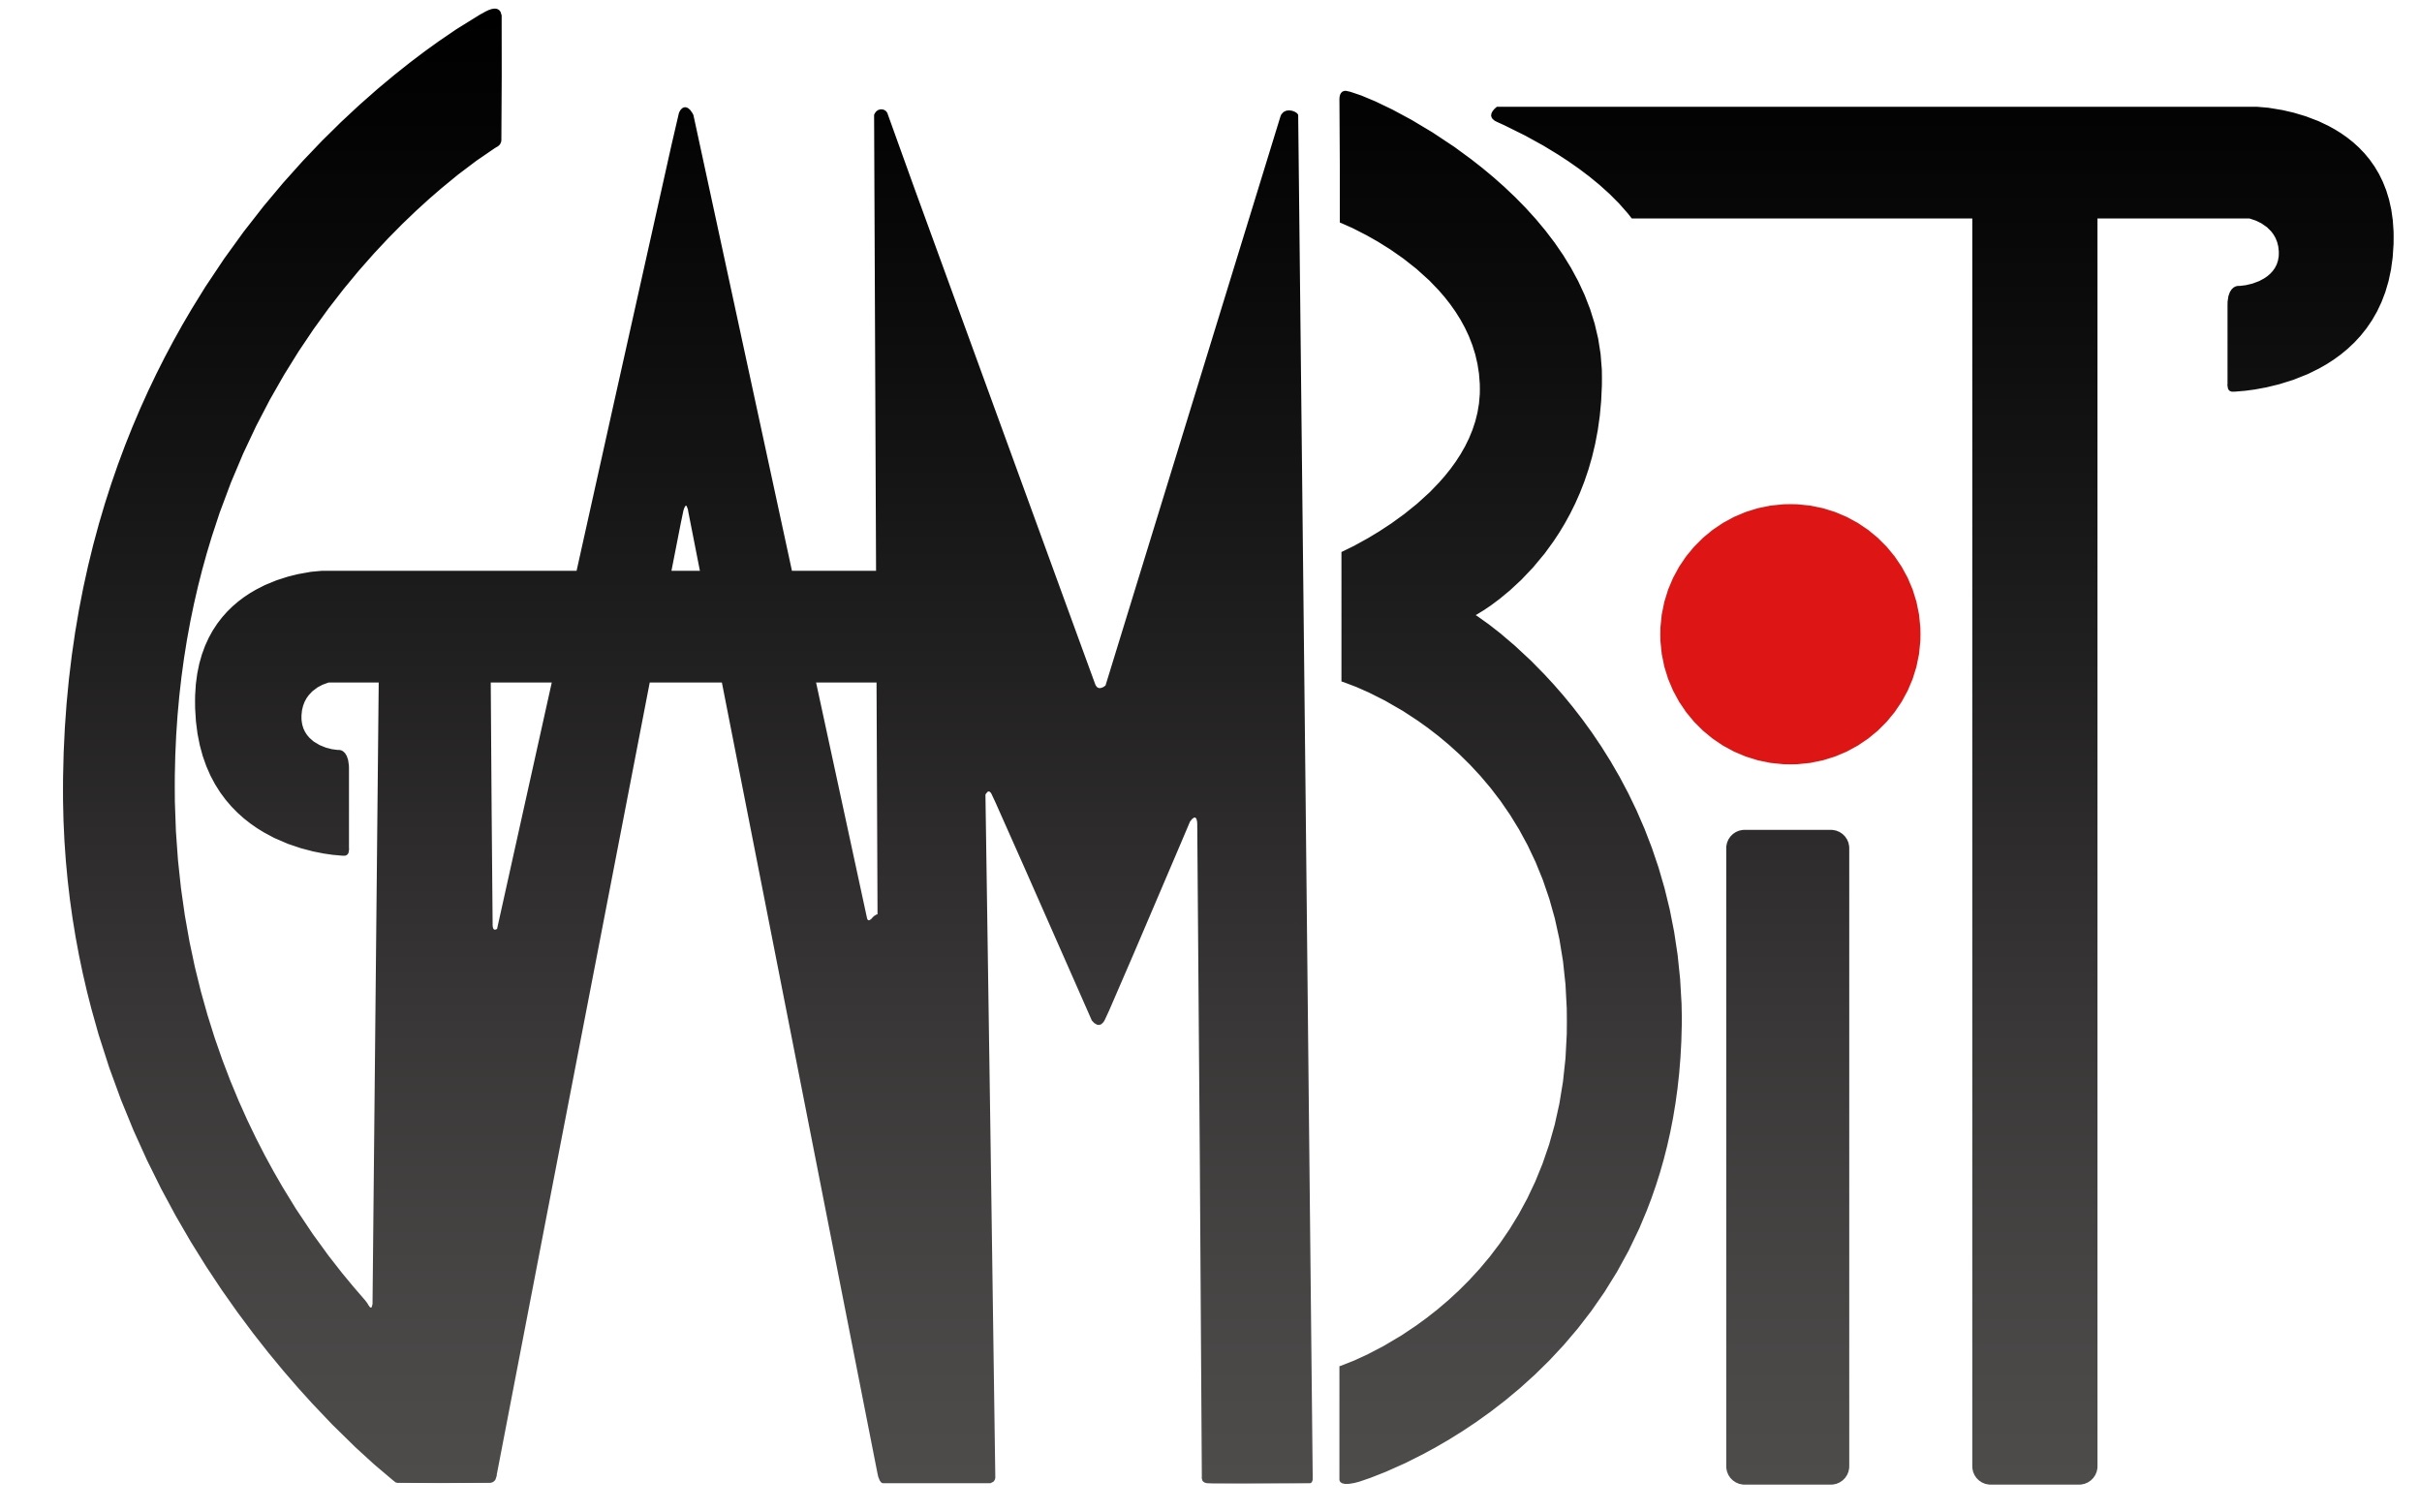 GAMBIT Logo.jpg 16f06fbe06ad7123f882c610bbf4712a